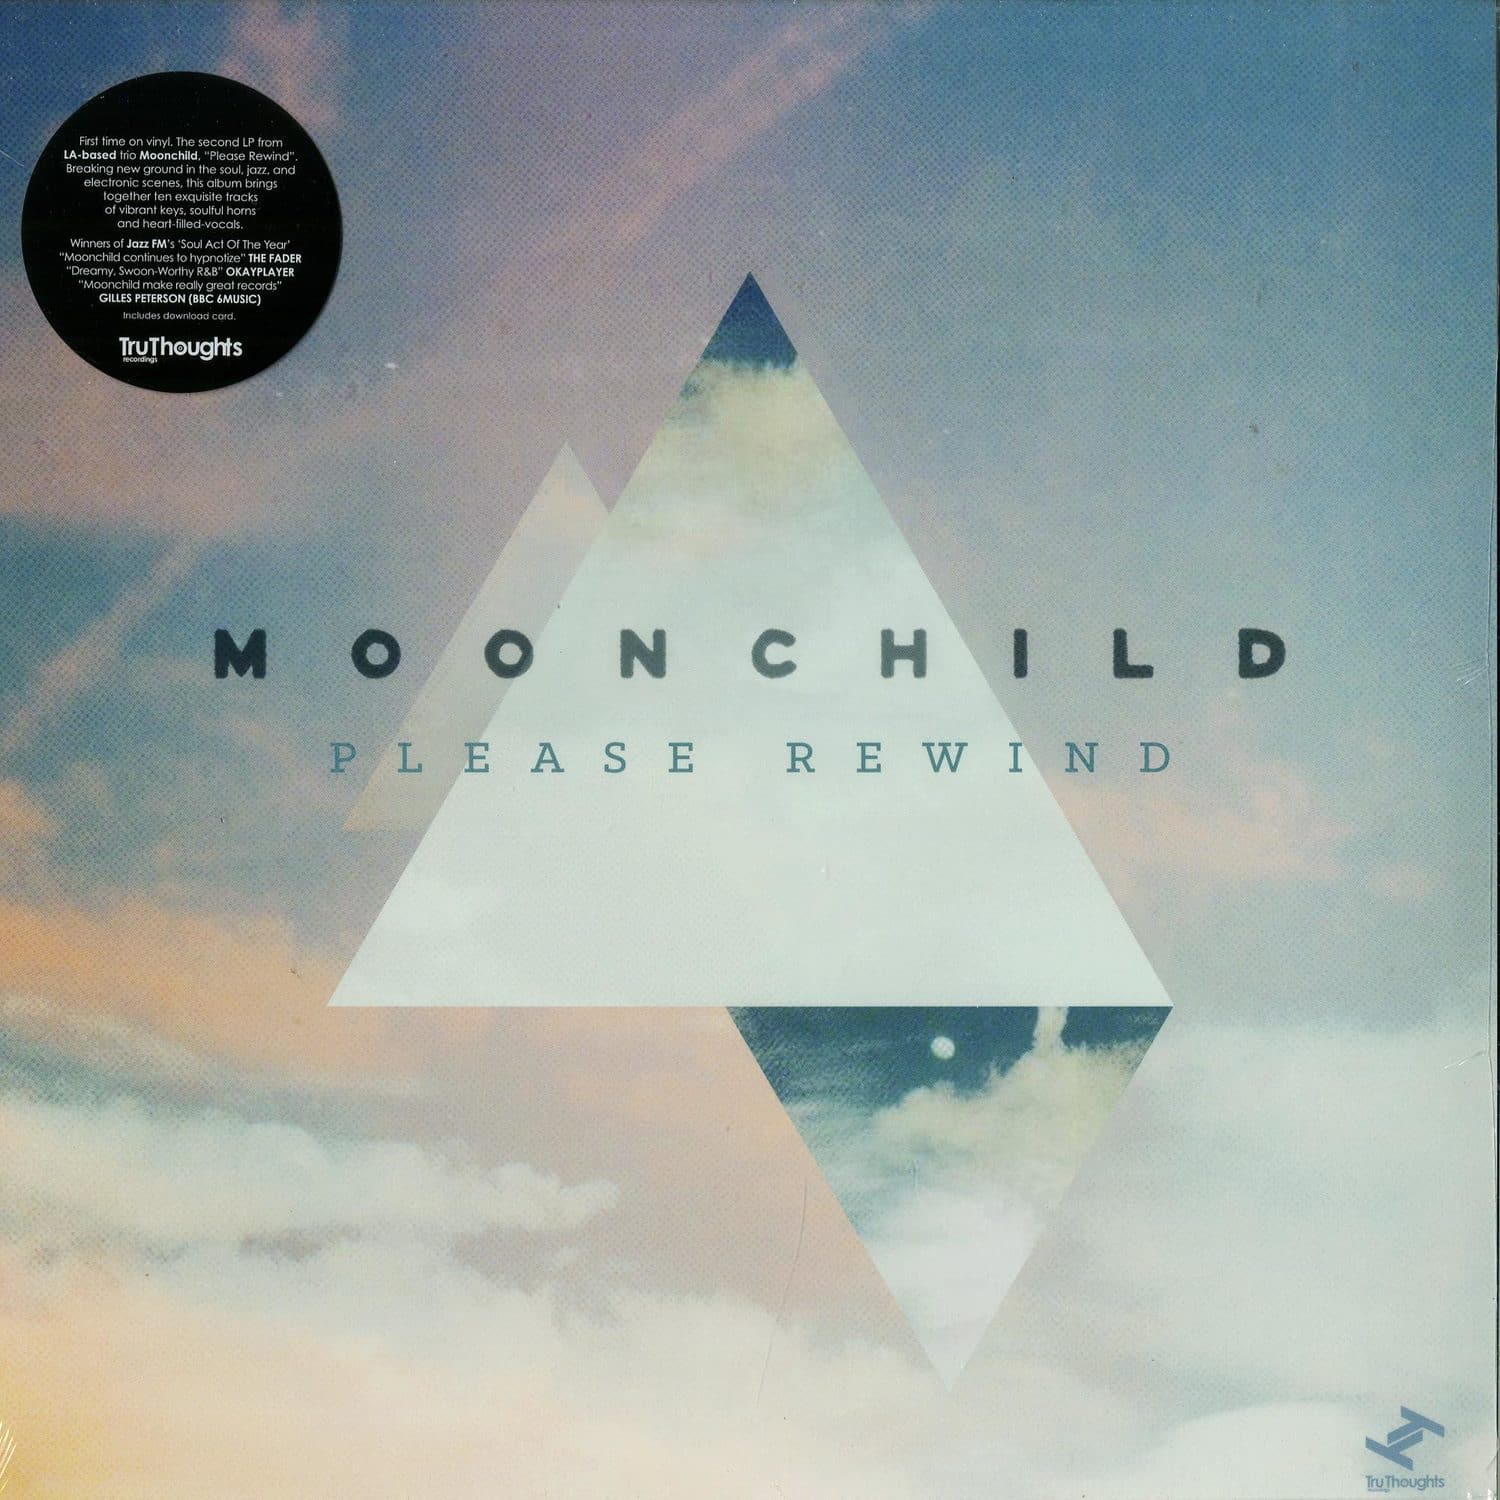 Moonchild - PLEASE REWIND 